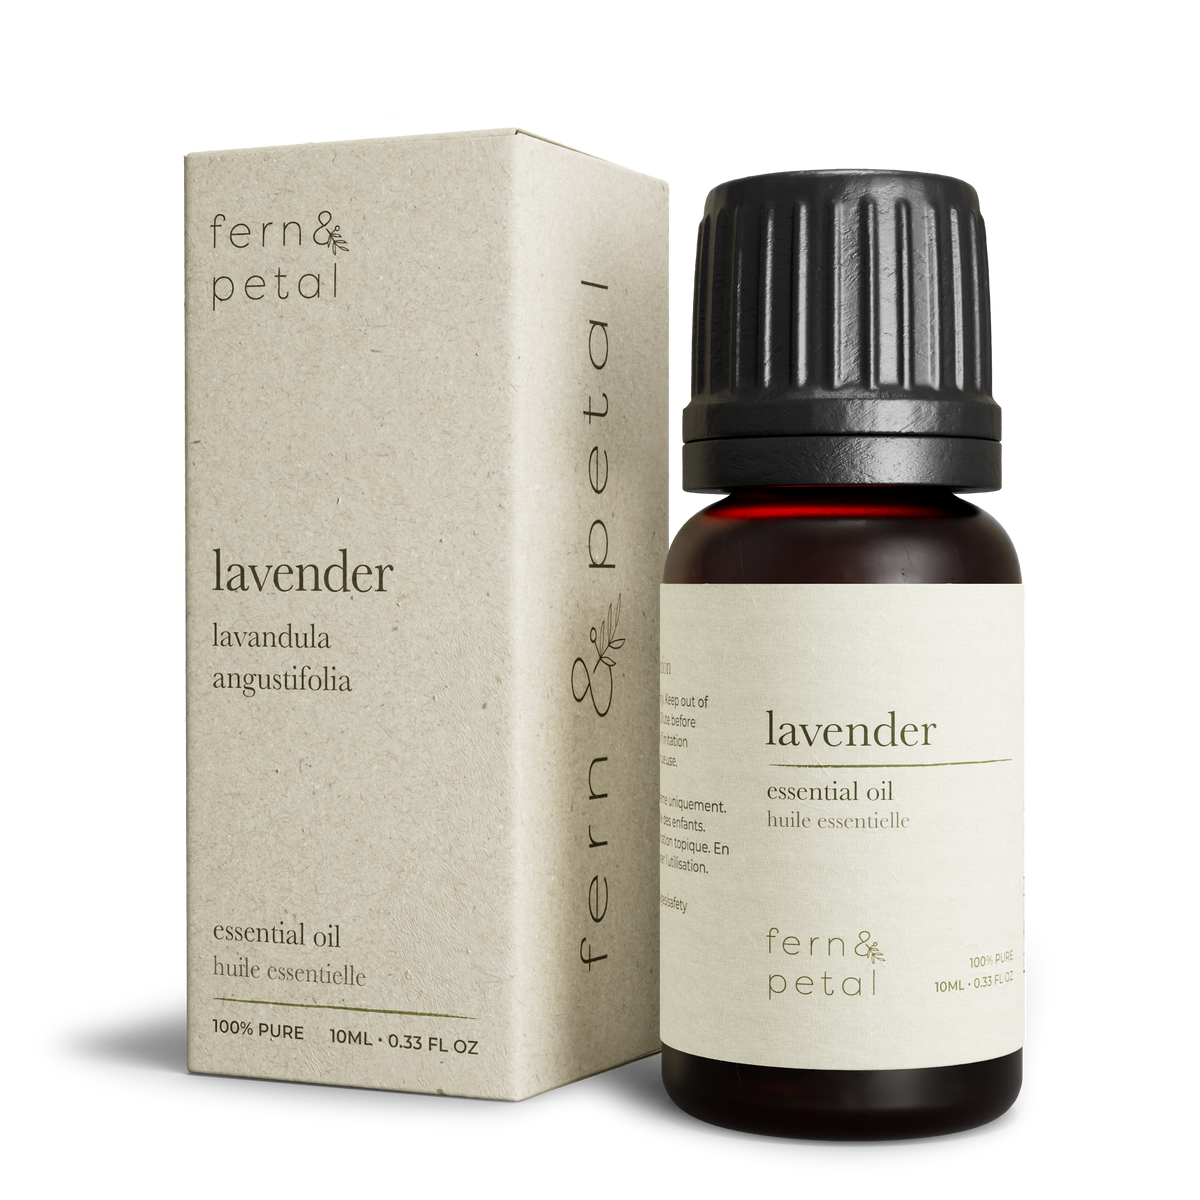 Fern & Petal - Lavender 10ml